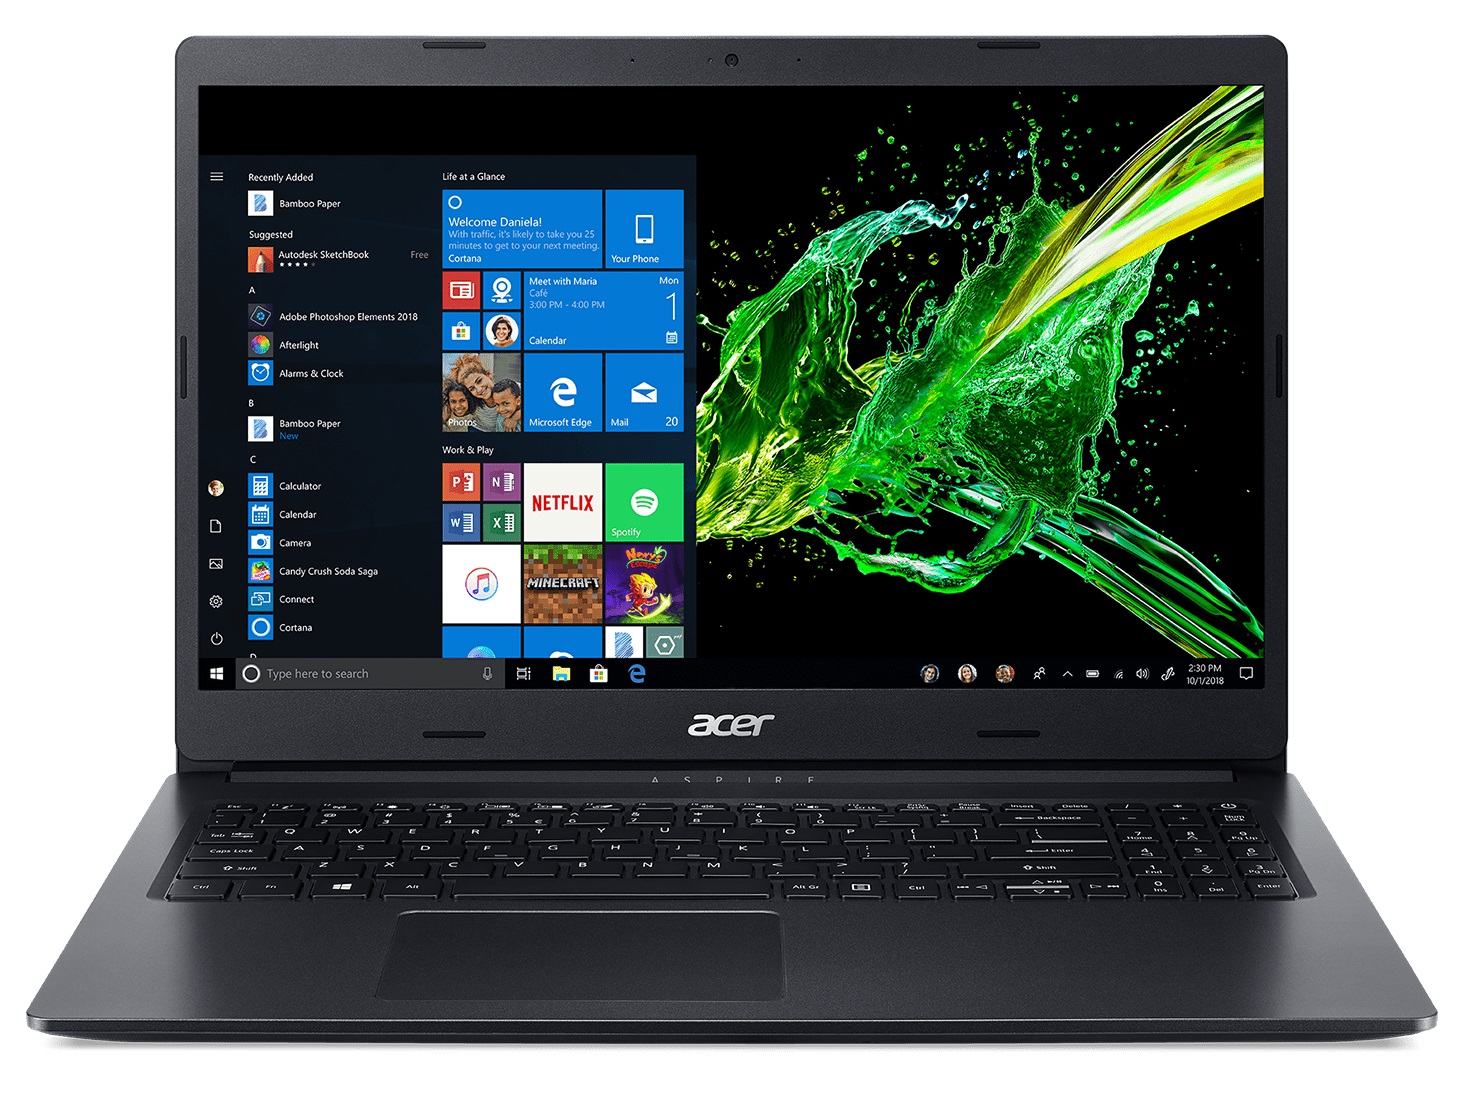 Laptop Acer Aspire 3 A315-22-48A6 uski okvir #rasprodajact